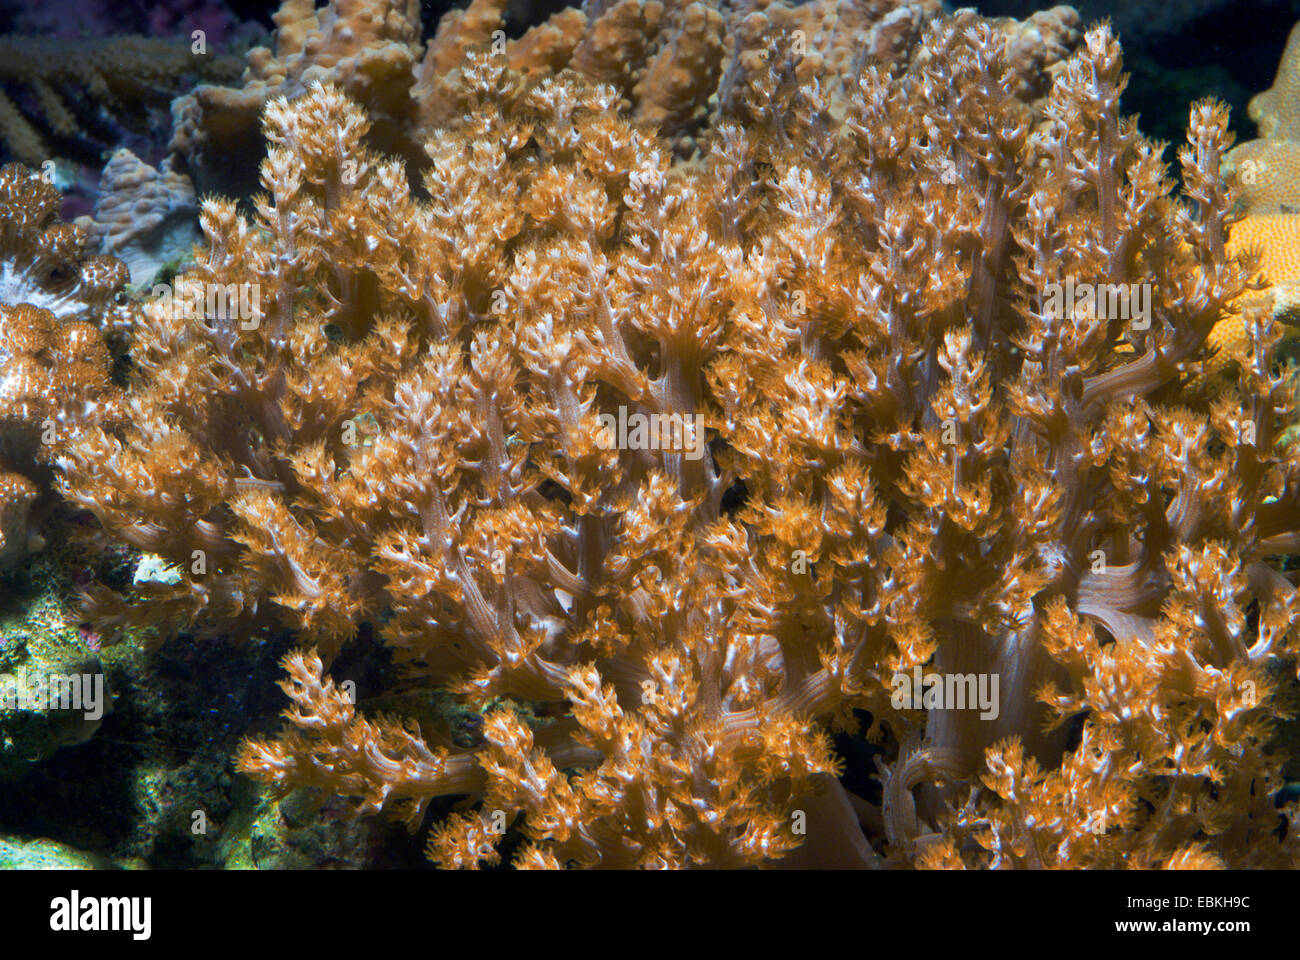 Kenya Tree Coral (Capnella spec.), close-up view Stock Photo